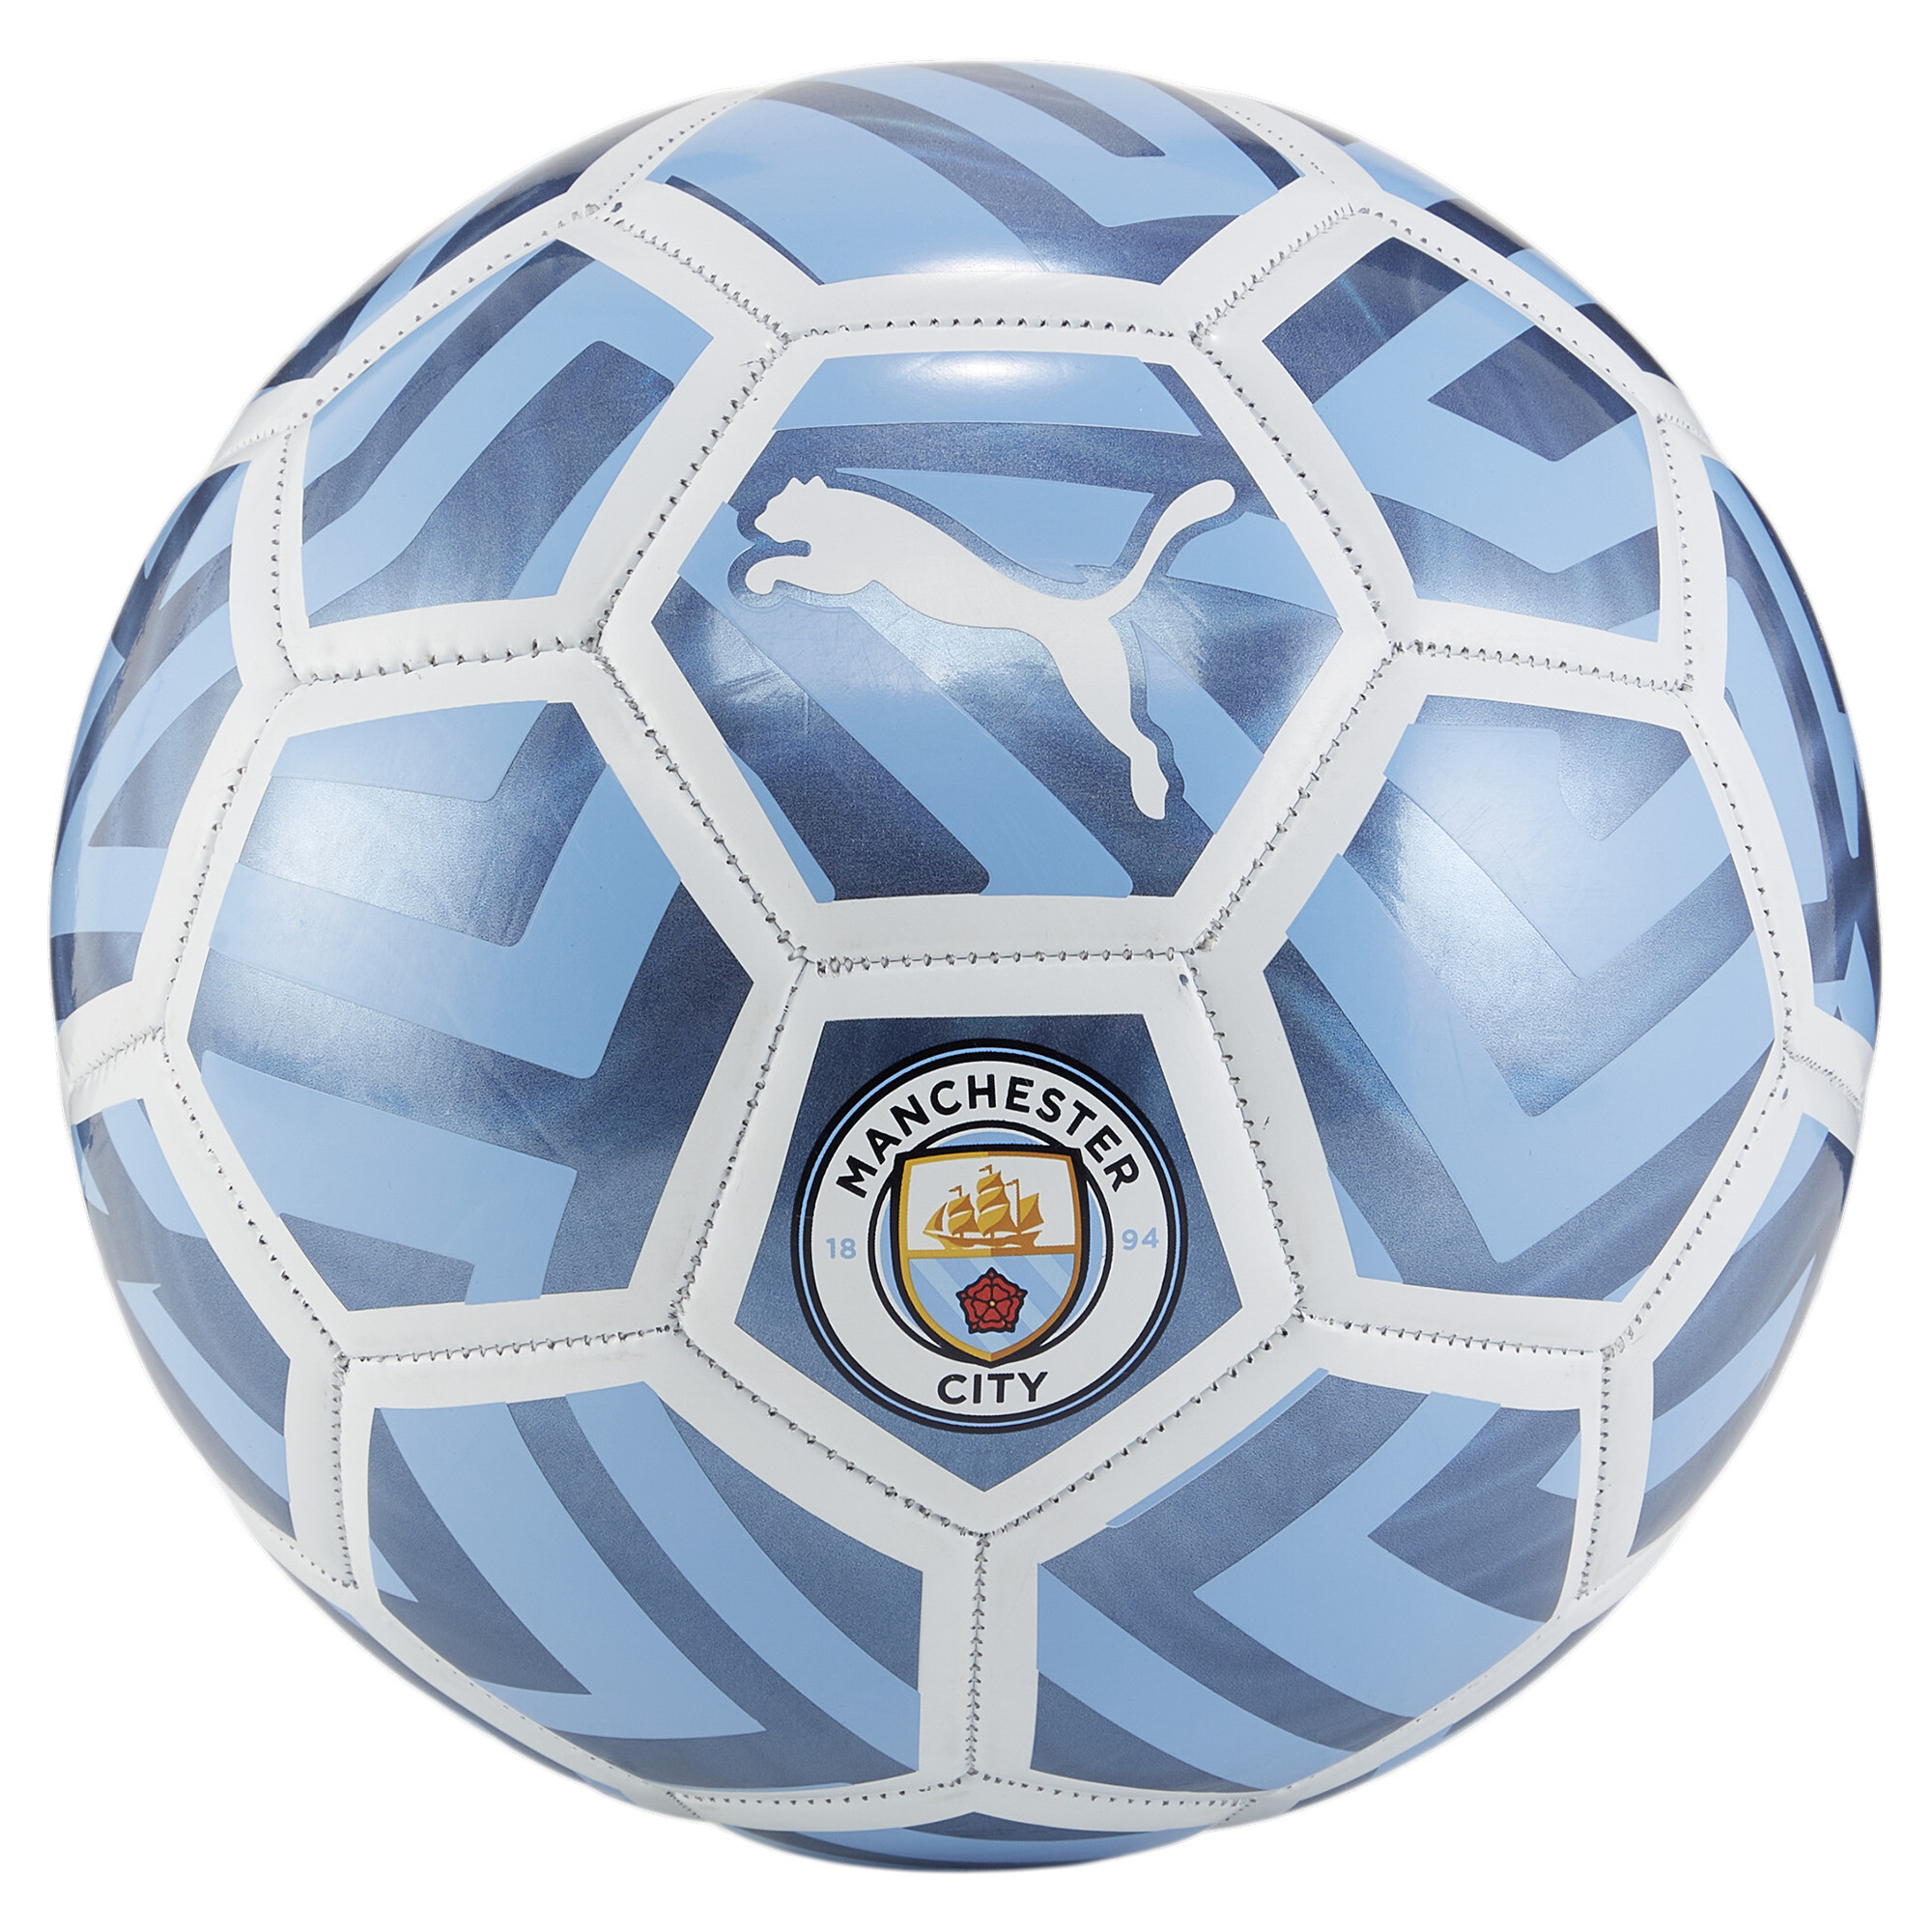 Puma Manchester City Fan Football, White, Size 3, Accessories